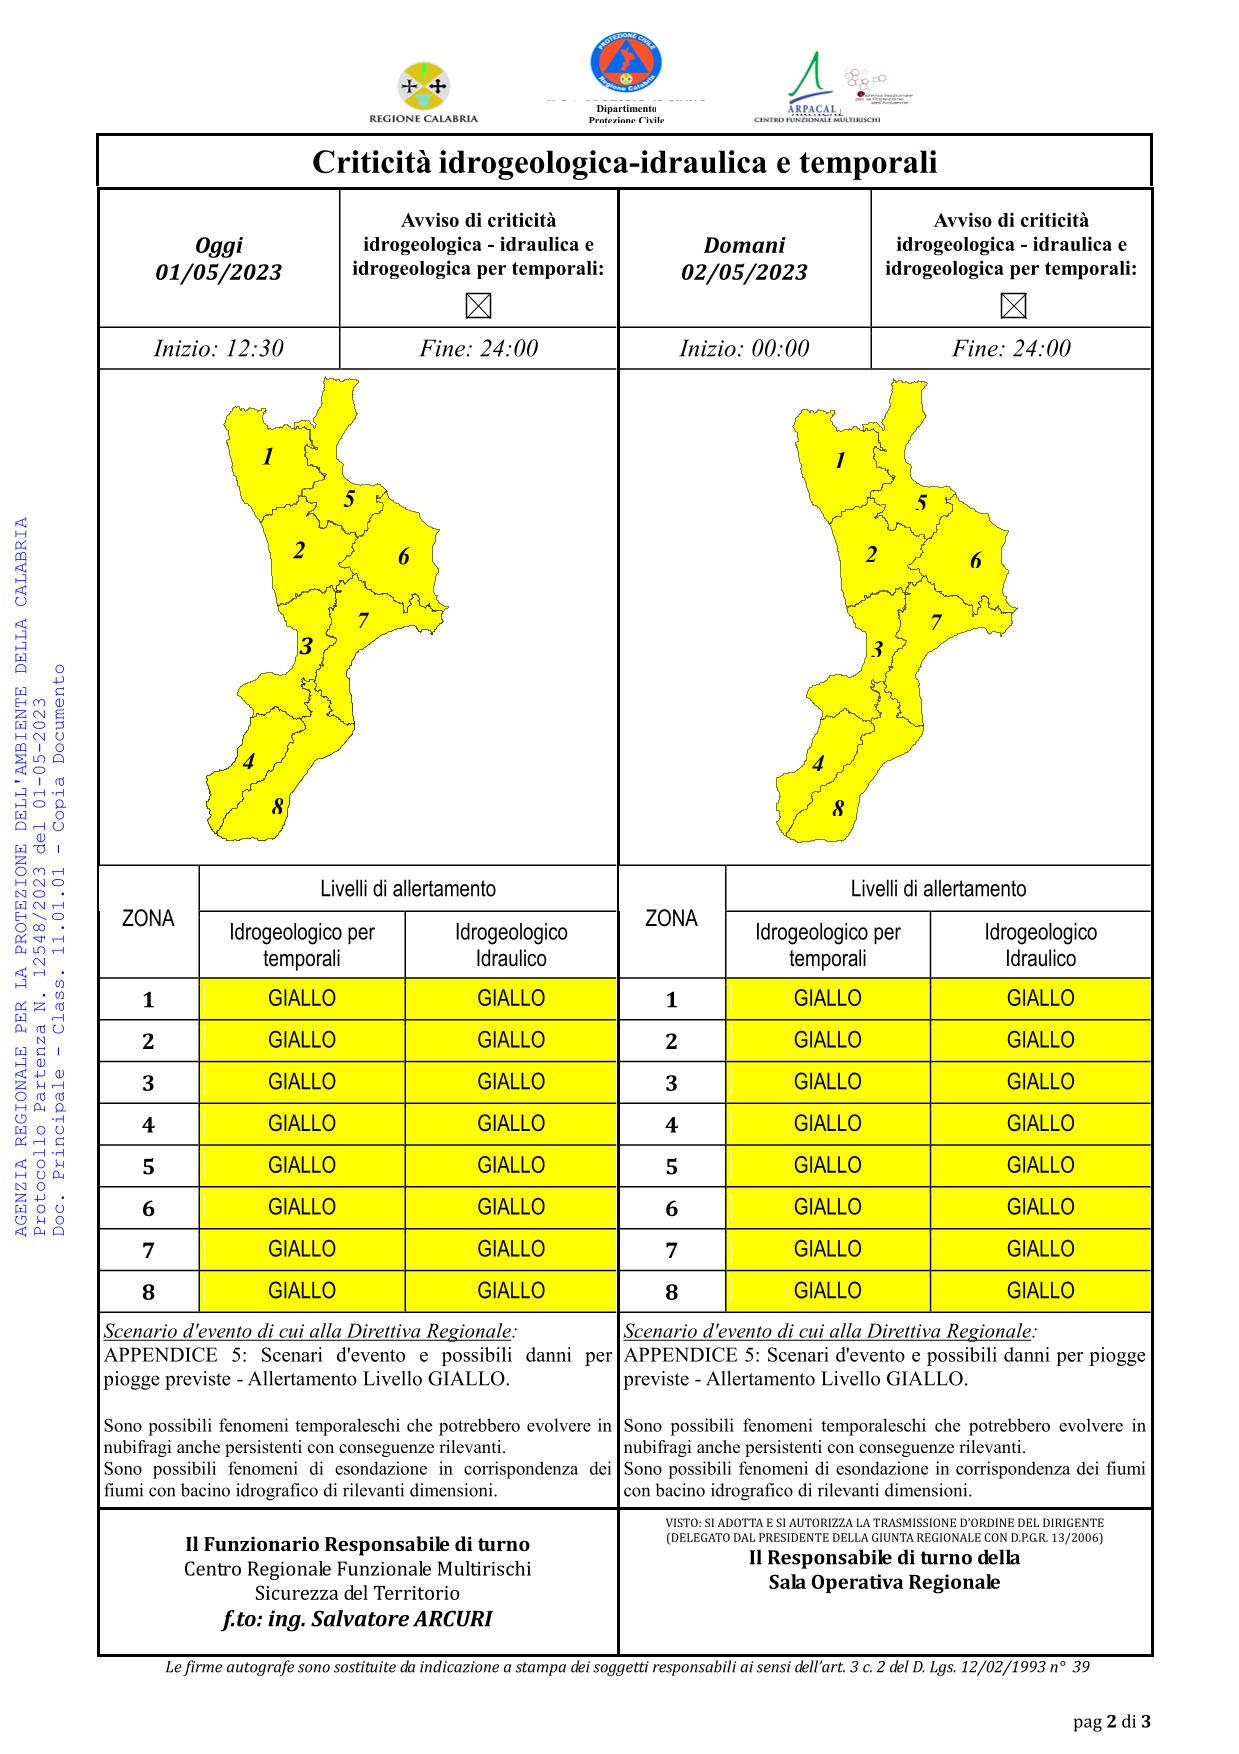 Criticità idrogeologica-idraulica e temporali in Calabria 01-05-2023